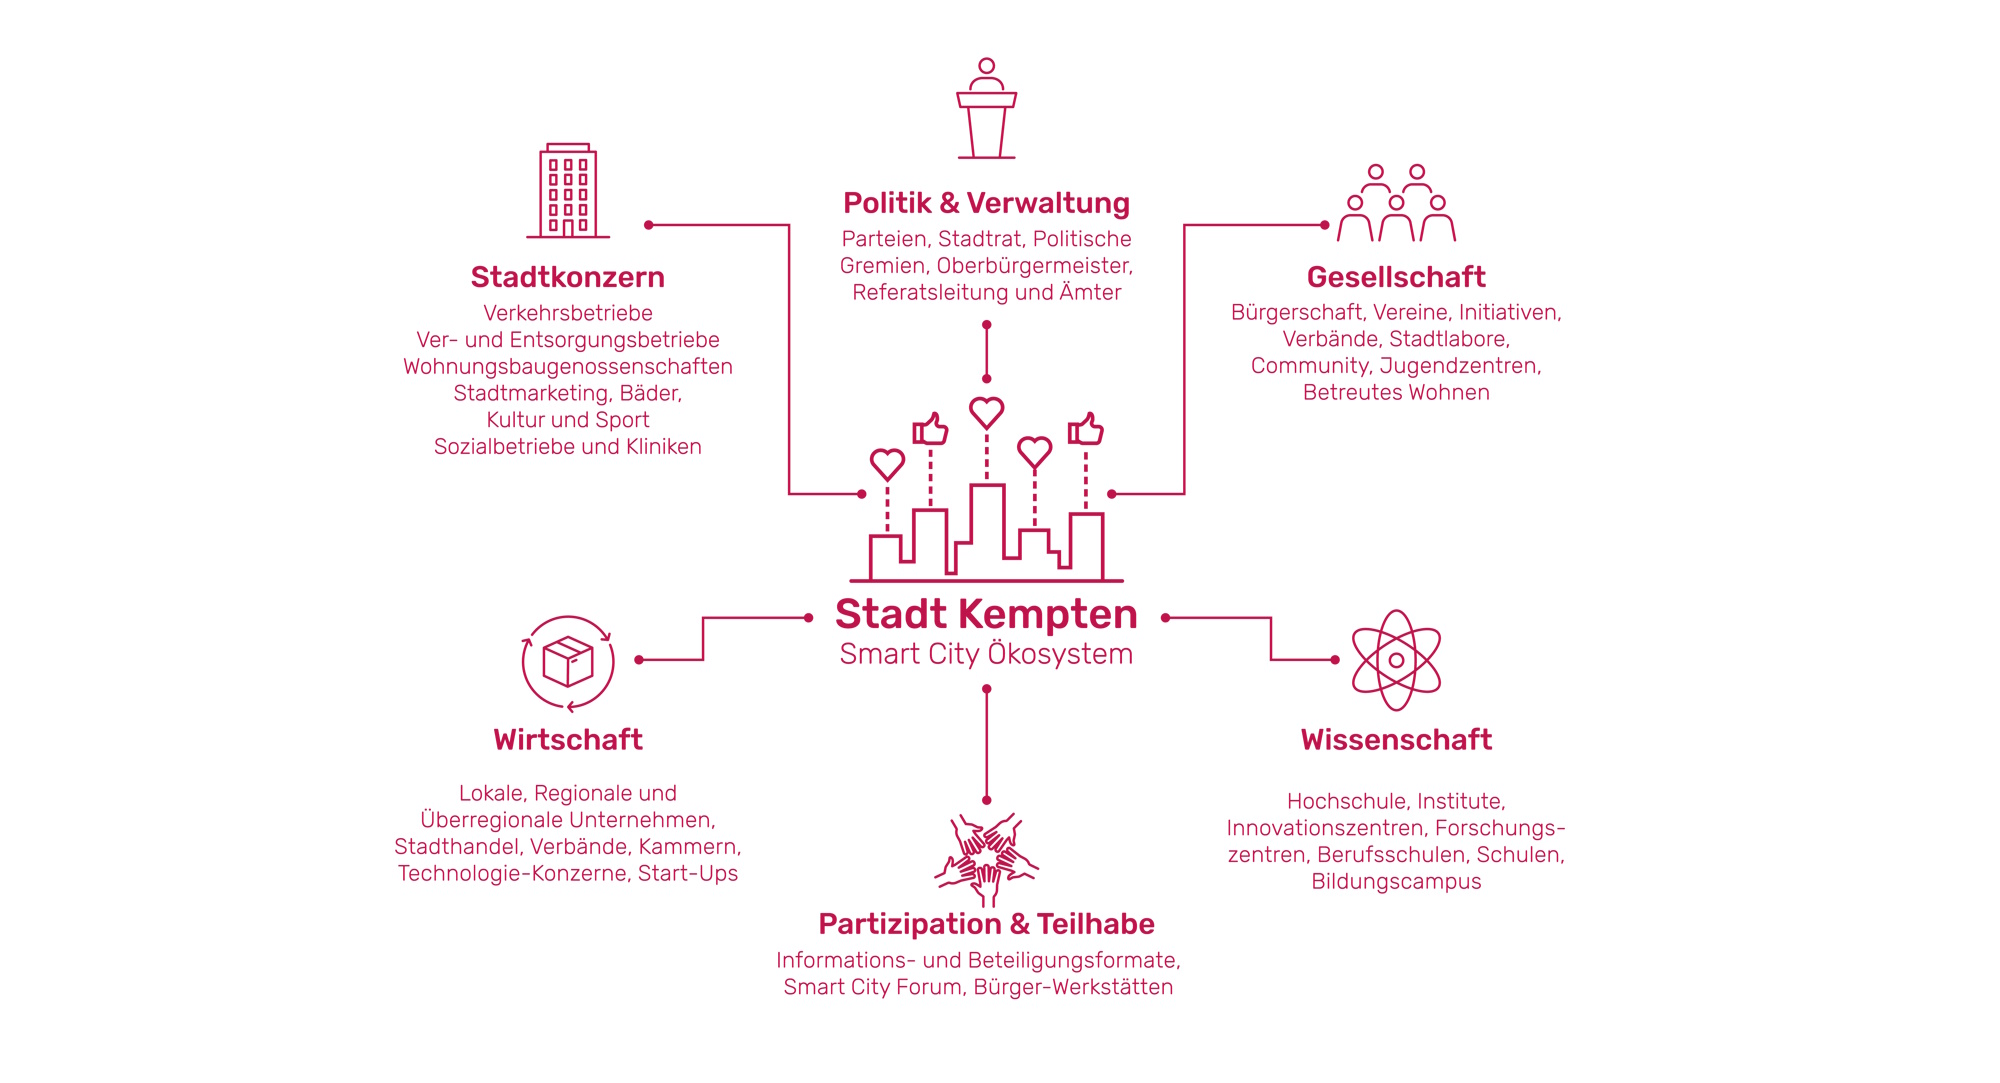 Smart City Ökosystem der Stadt Kempten